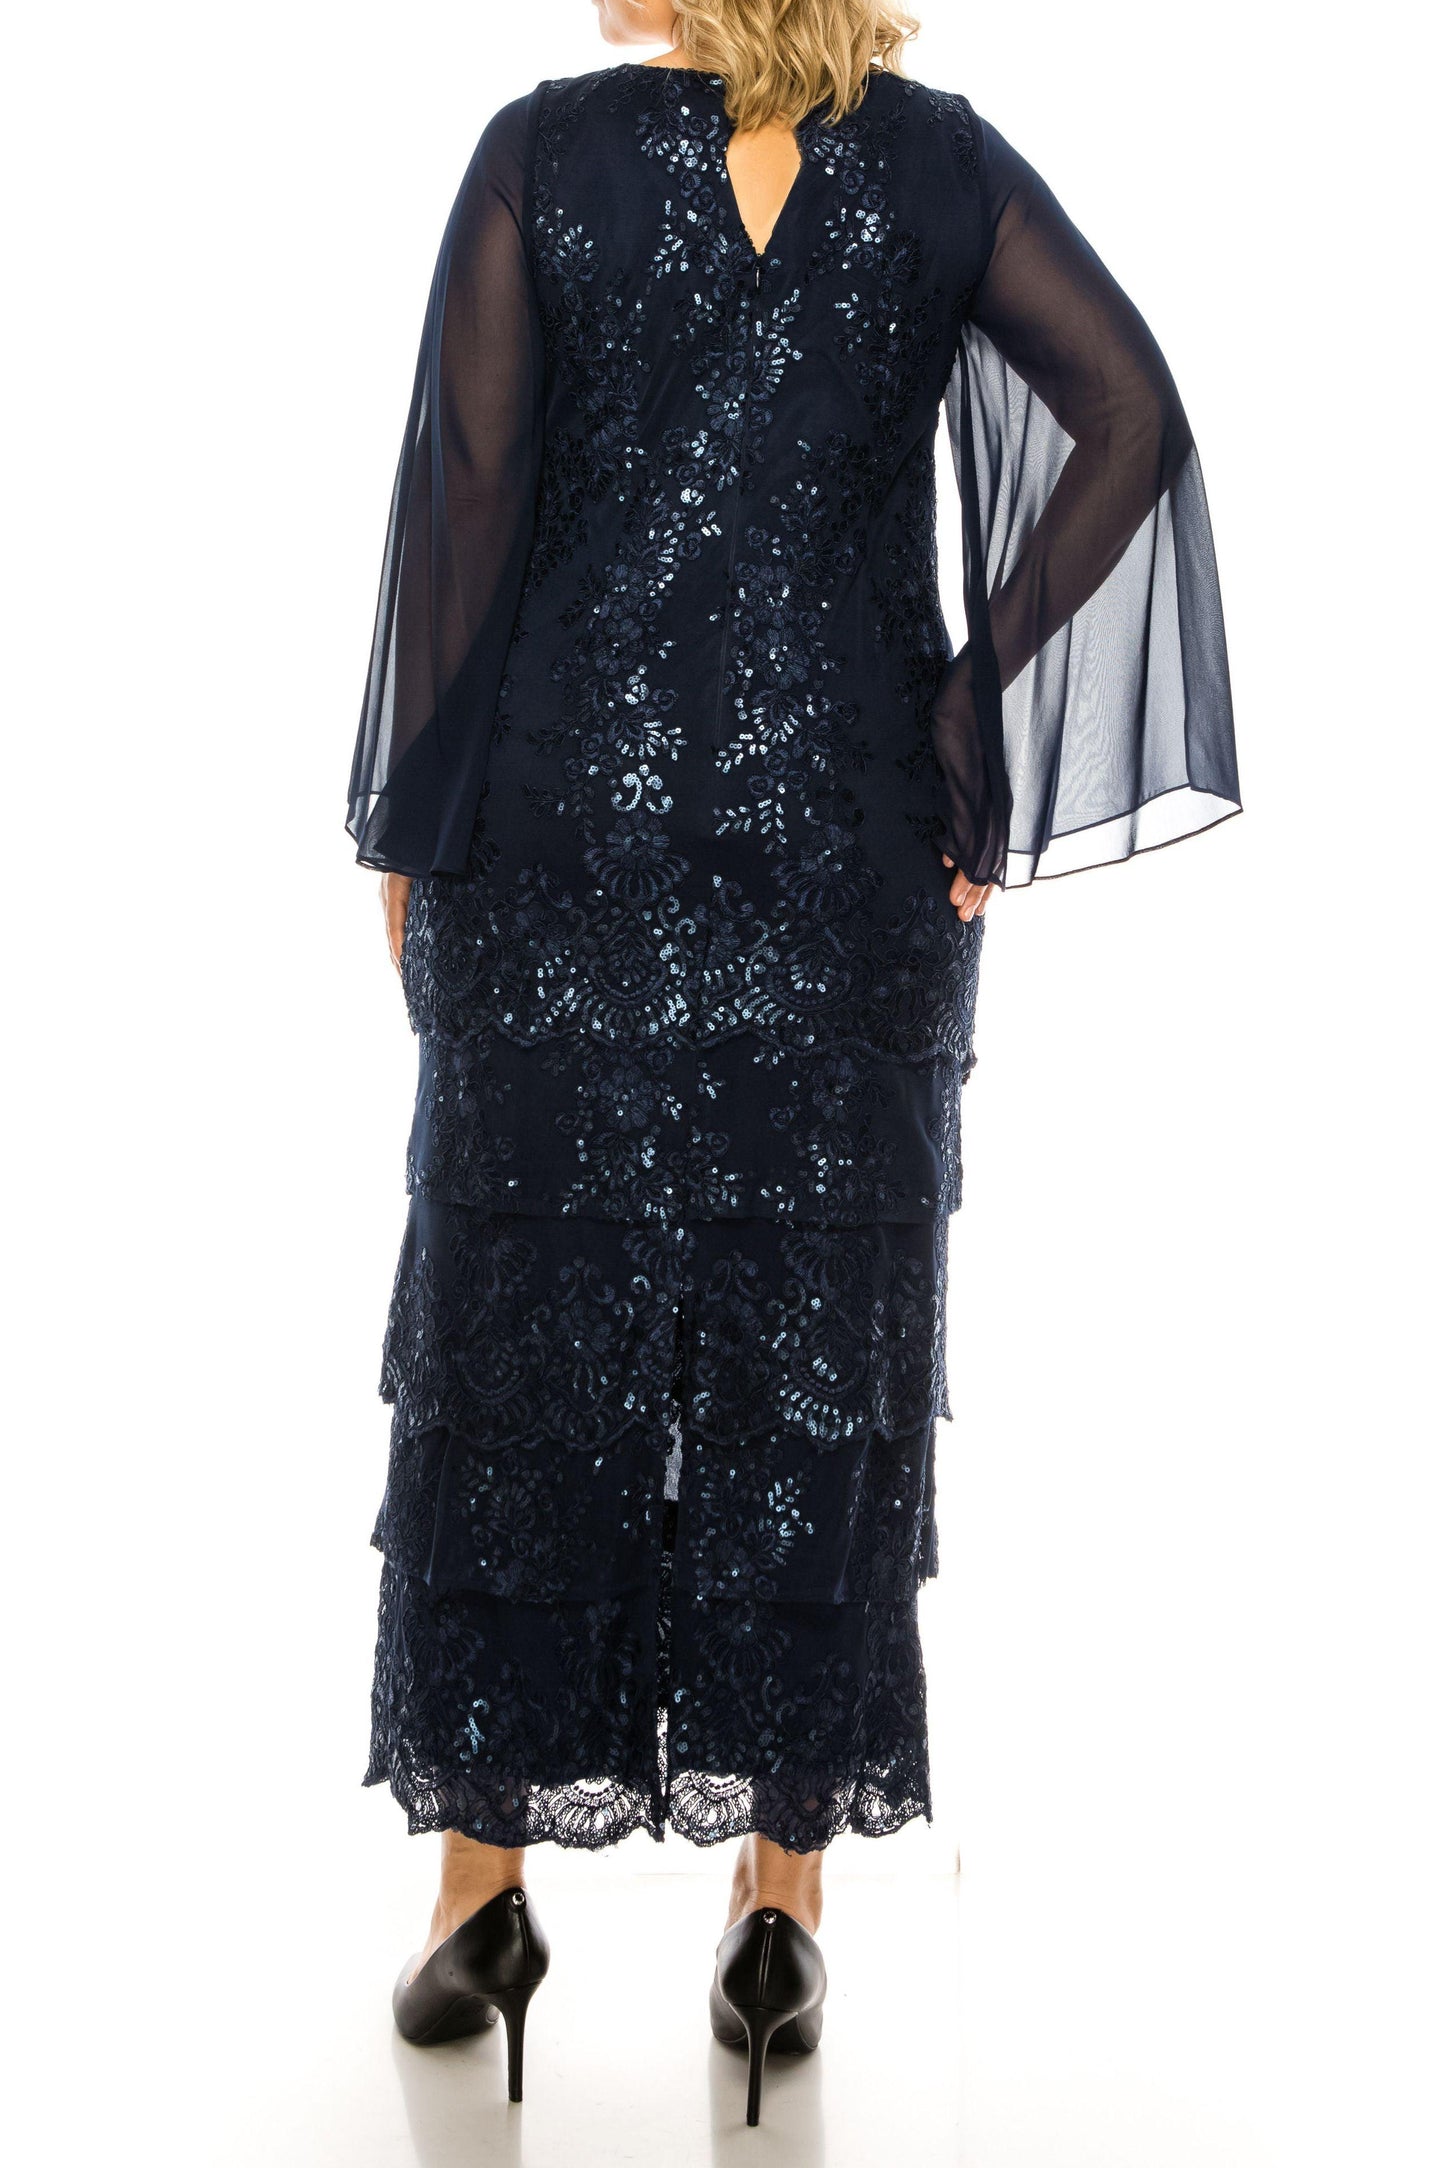 Maya Brooke Long Formal Evening Dress 28407MV - The Dress Outlet